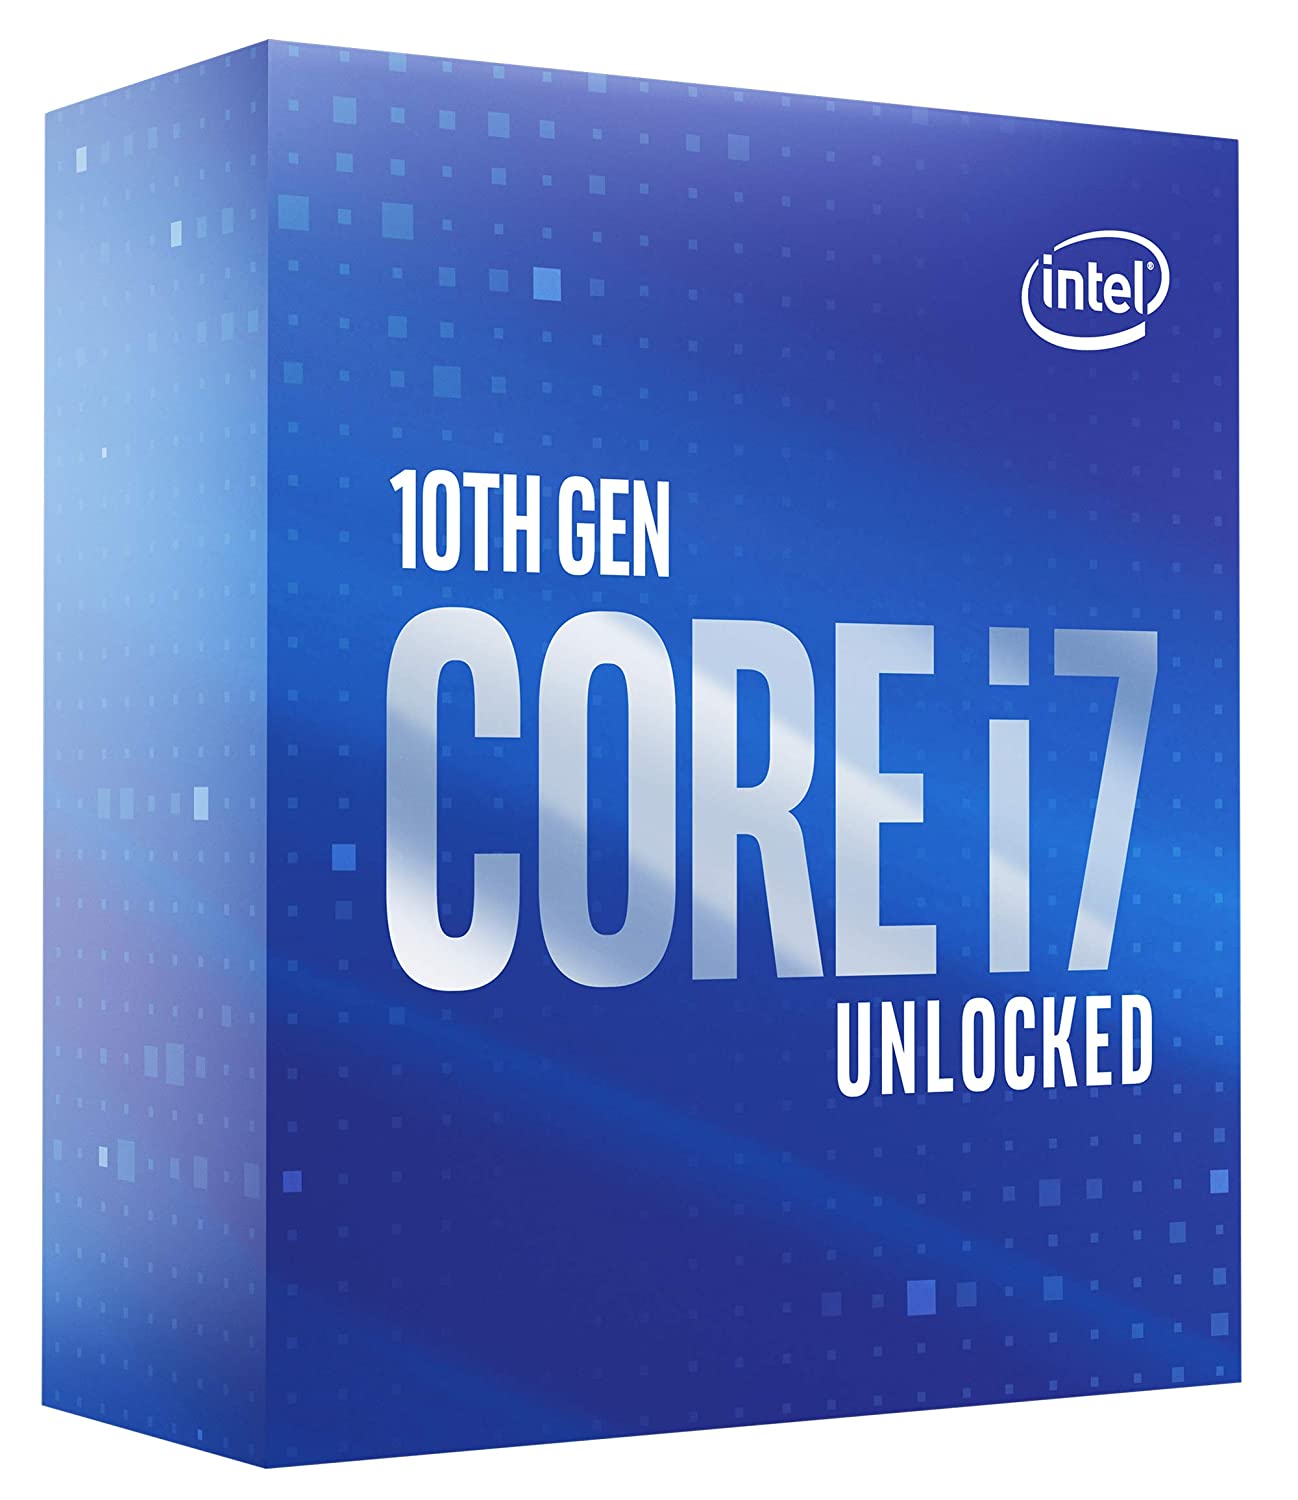 Intel Core i7-10700K Desktop Processor 8 Cores up to 5.1 GHz Unlocked� LGA1200 (Intel 400 Series chipset) 125W